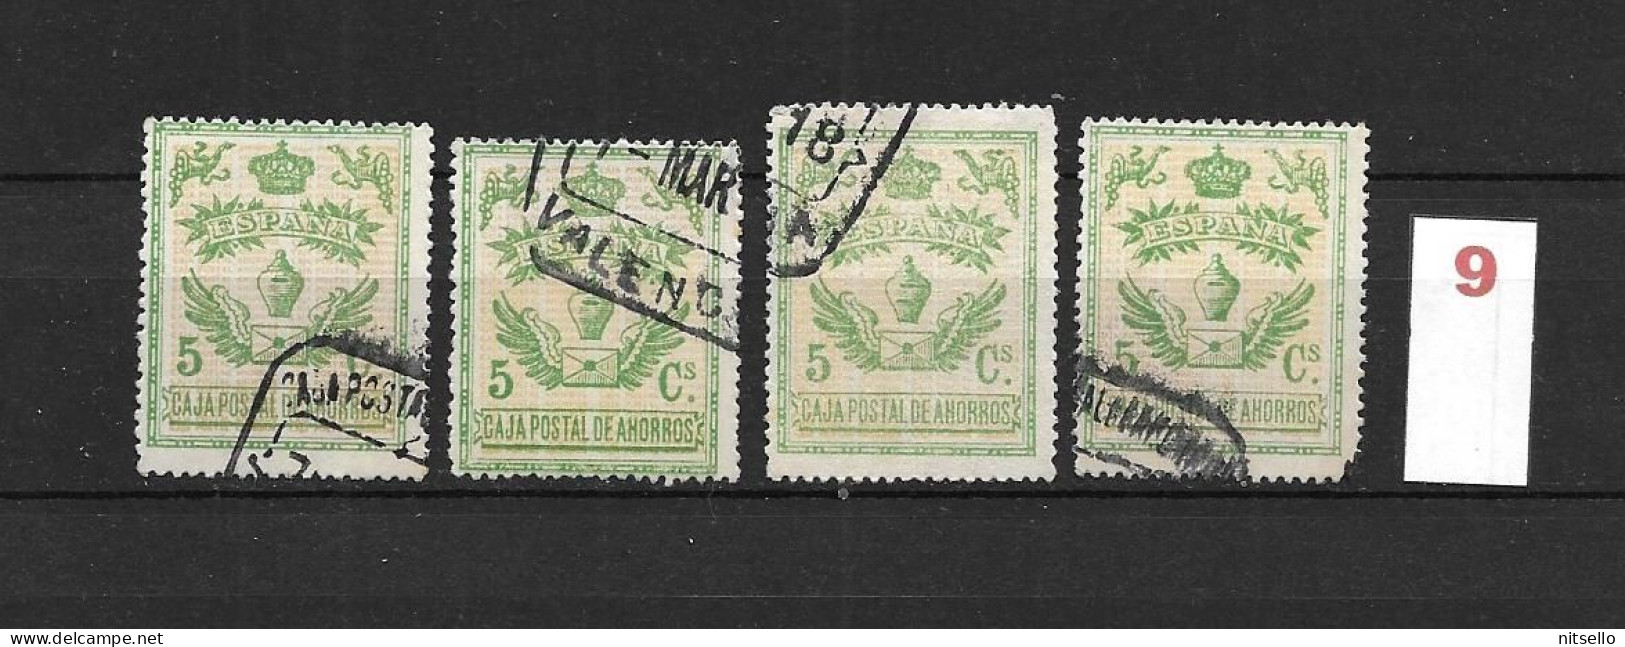 LOTE 1891 C  ///   ESPAÑA 1918 CAJA POSTAL DE AHORROS 5 CTMOS         ¡¡¡ LIQUIDACION - JE LIQUIDE - SIEDLUNG !!! - Revenue Stamps